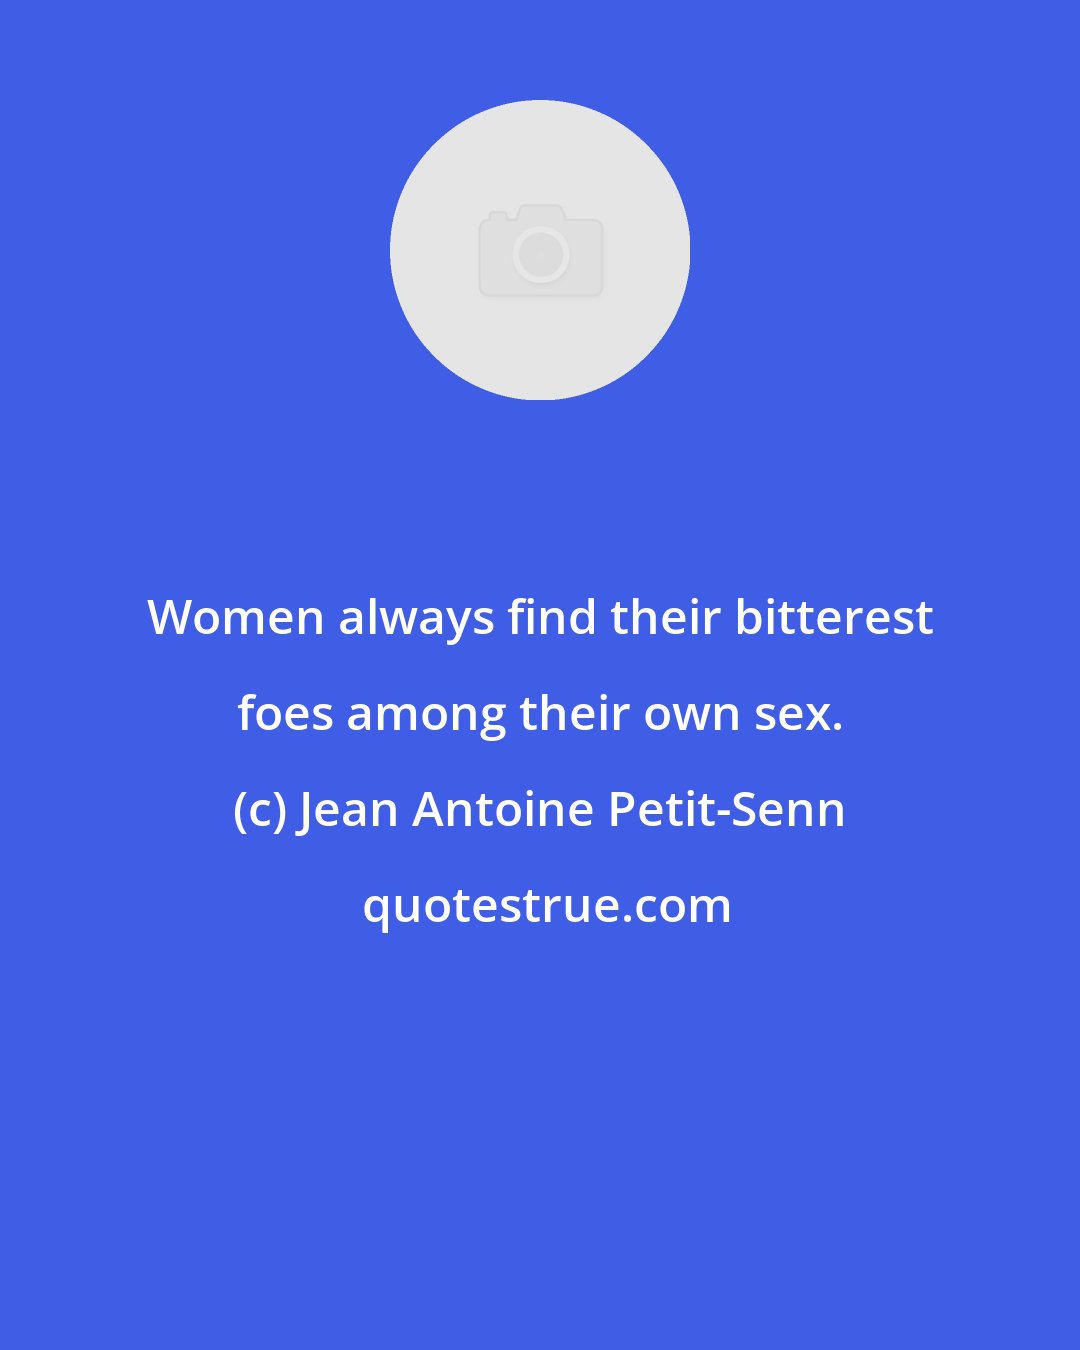 Jean Antoine Petit-Senn: Women always find their bitterest foes among their own sex.